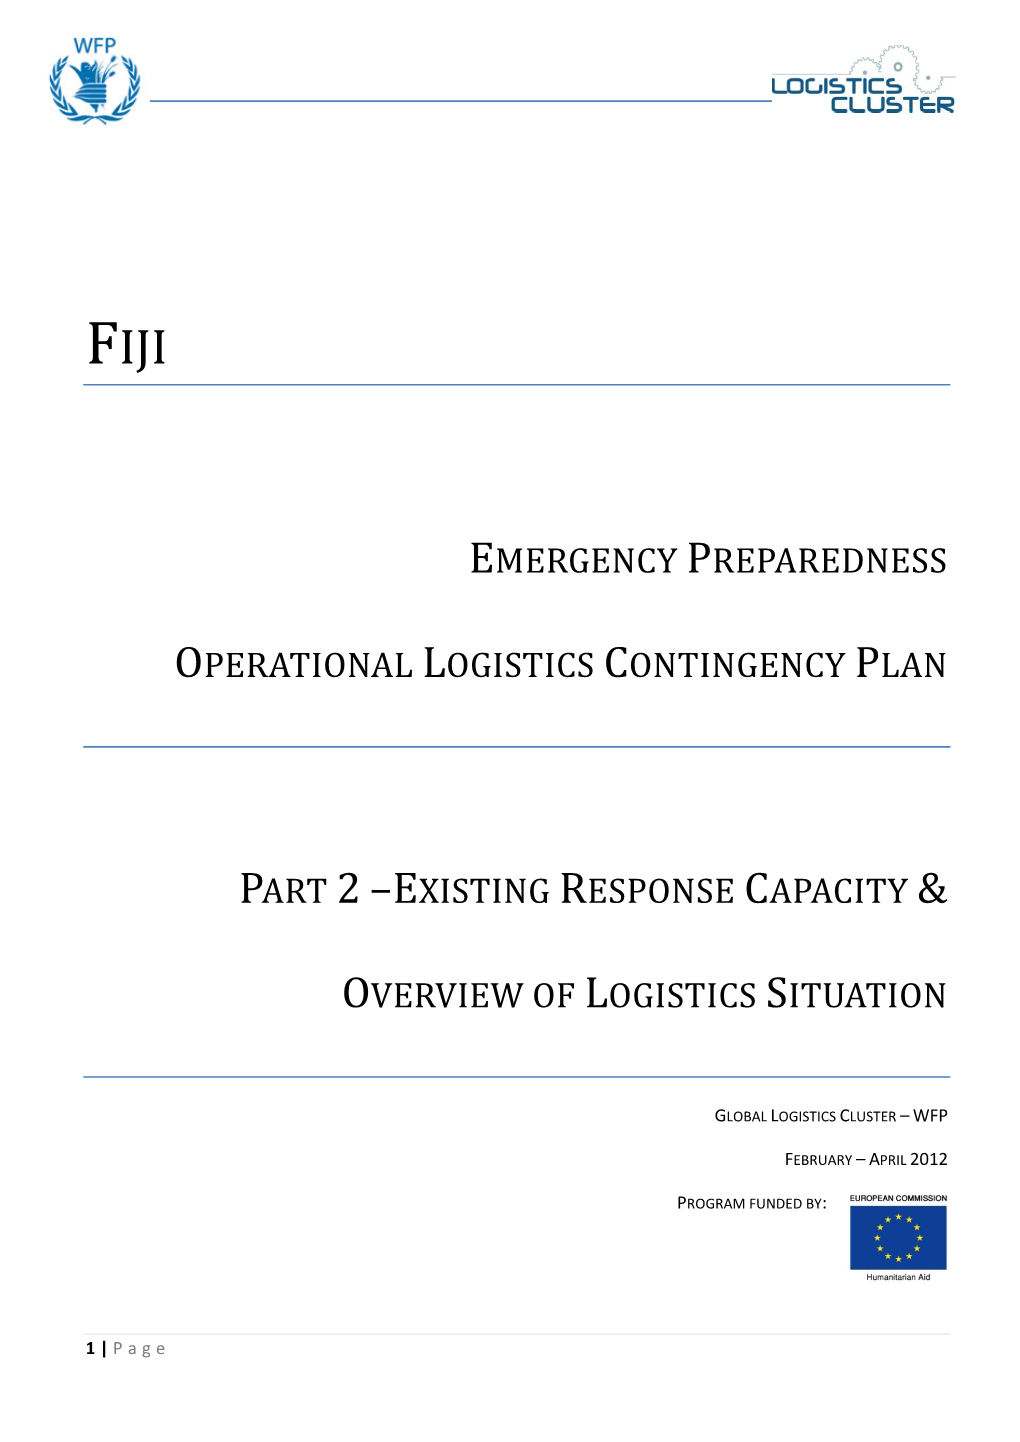 Emergency Preparedness Operational